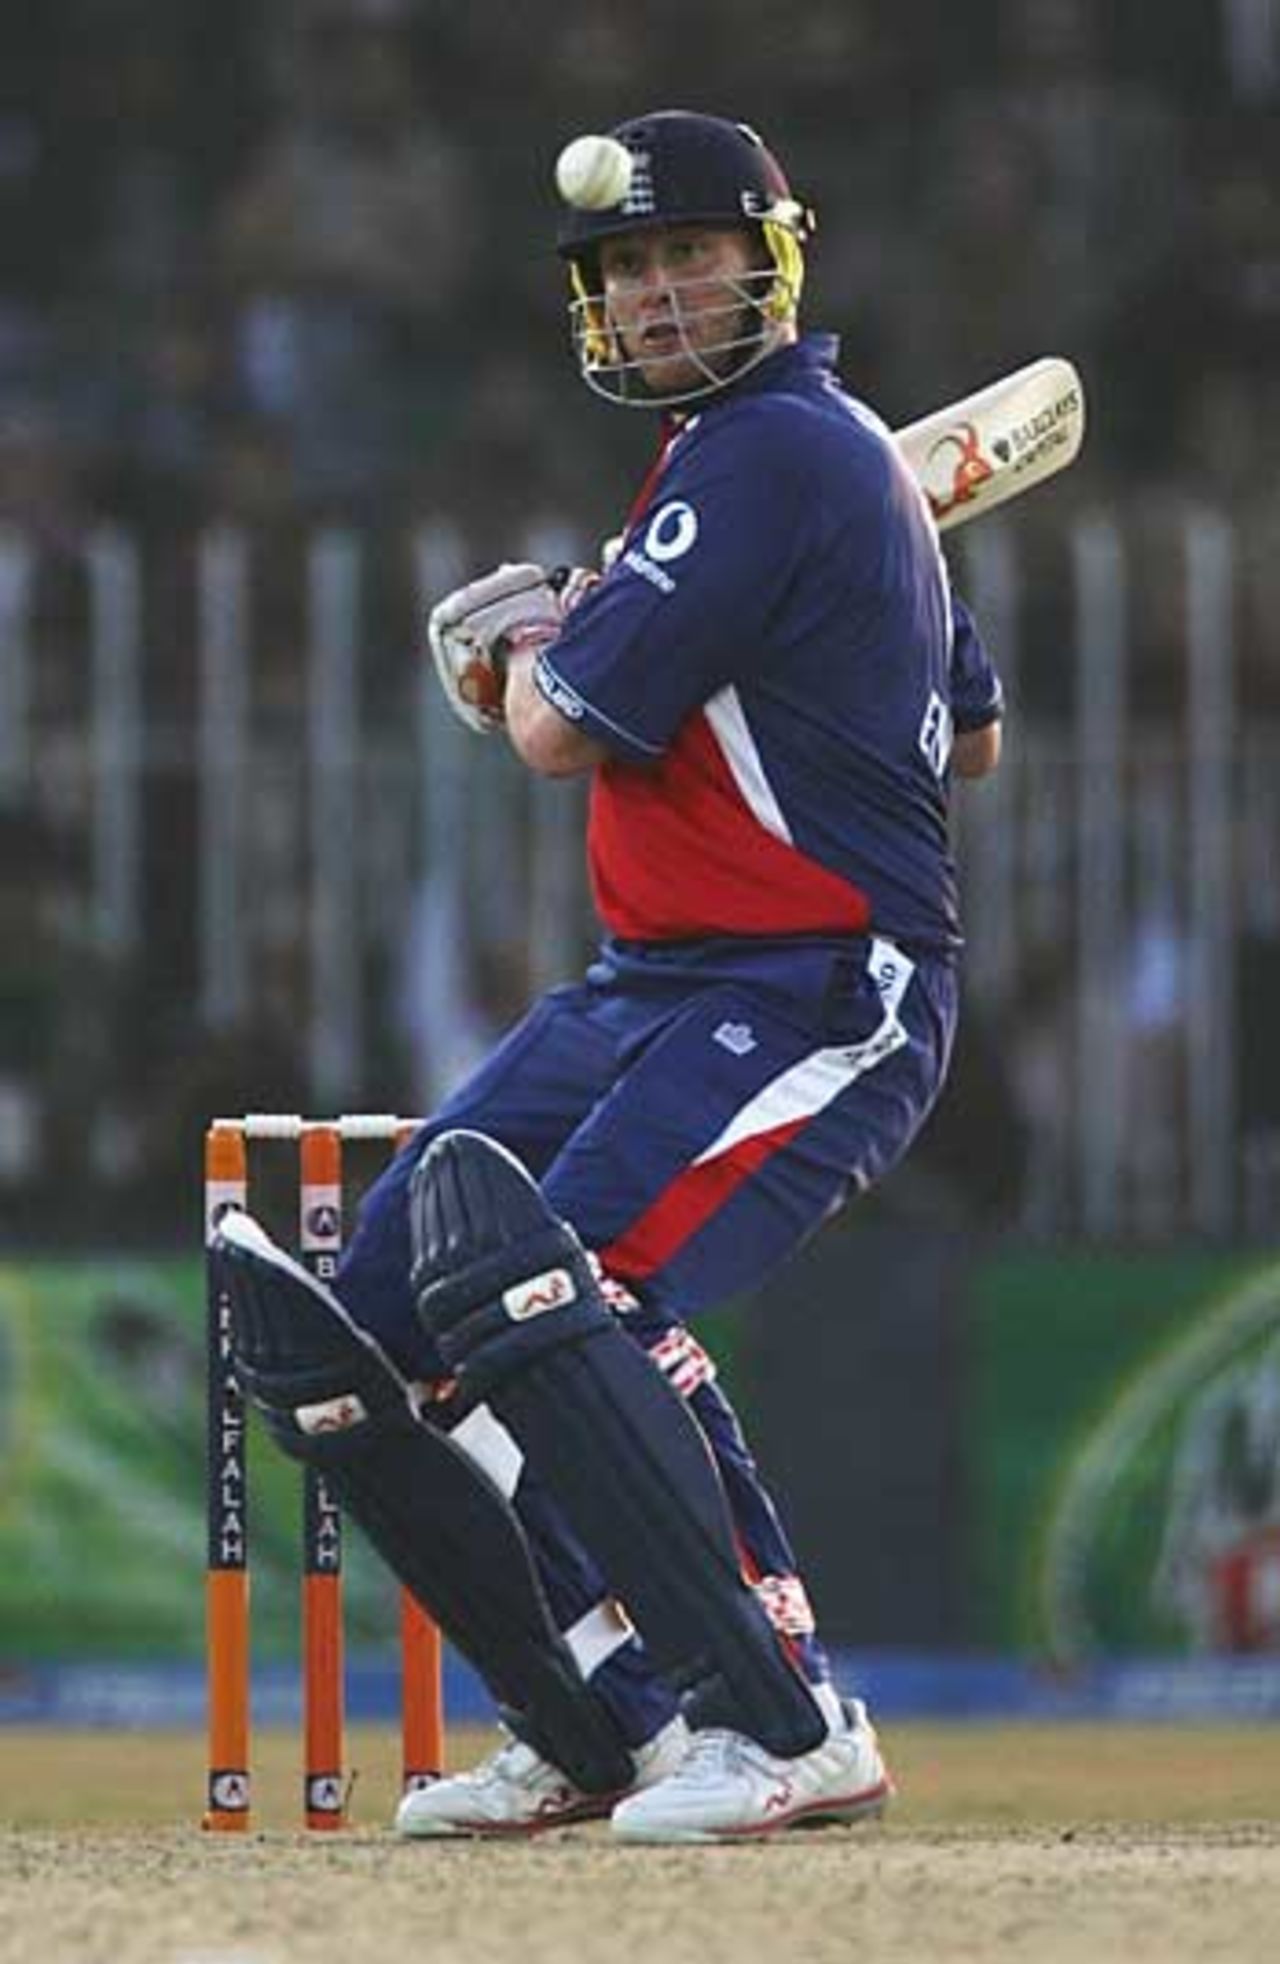 Andrew Flintoff receives a high full toss from Rana Naved-ul-Hasan, Pakistan v England, 4th ODI, Rawalpindi, December 19, 2005